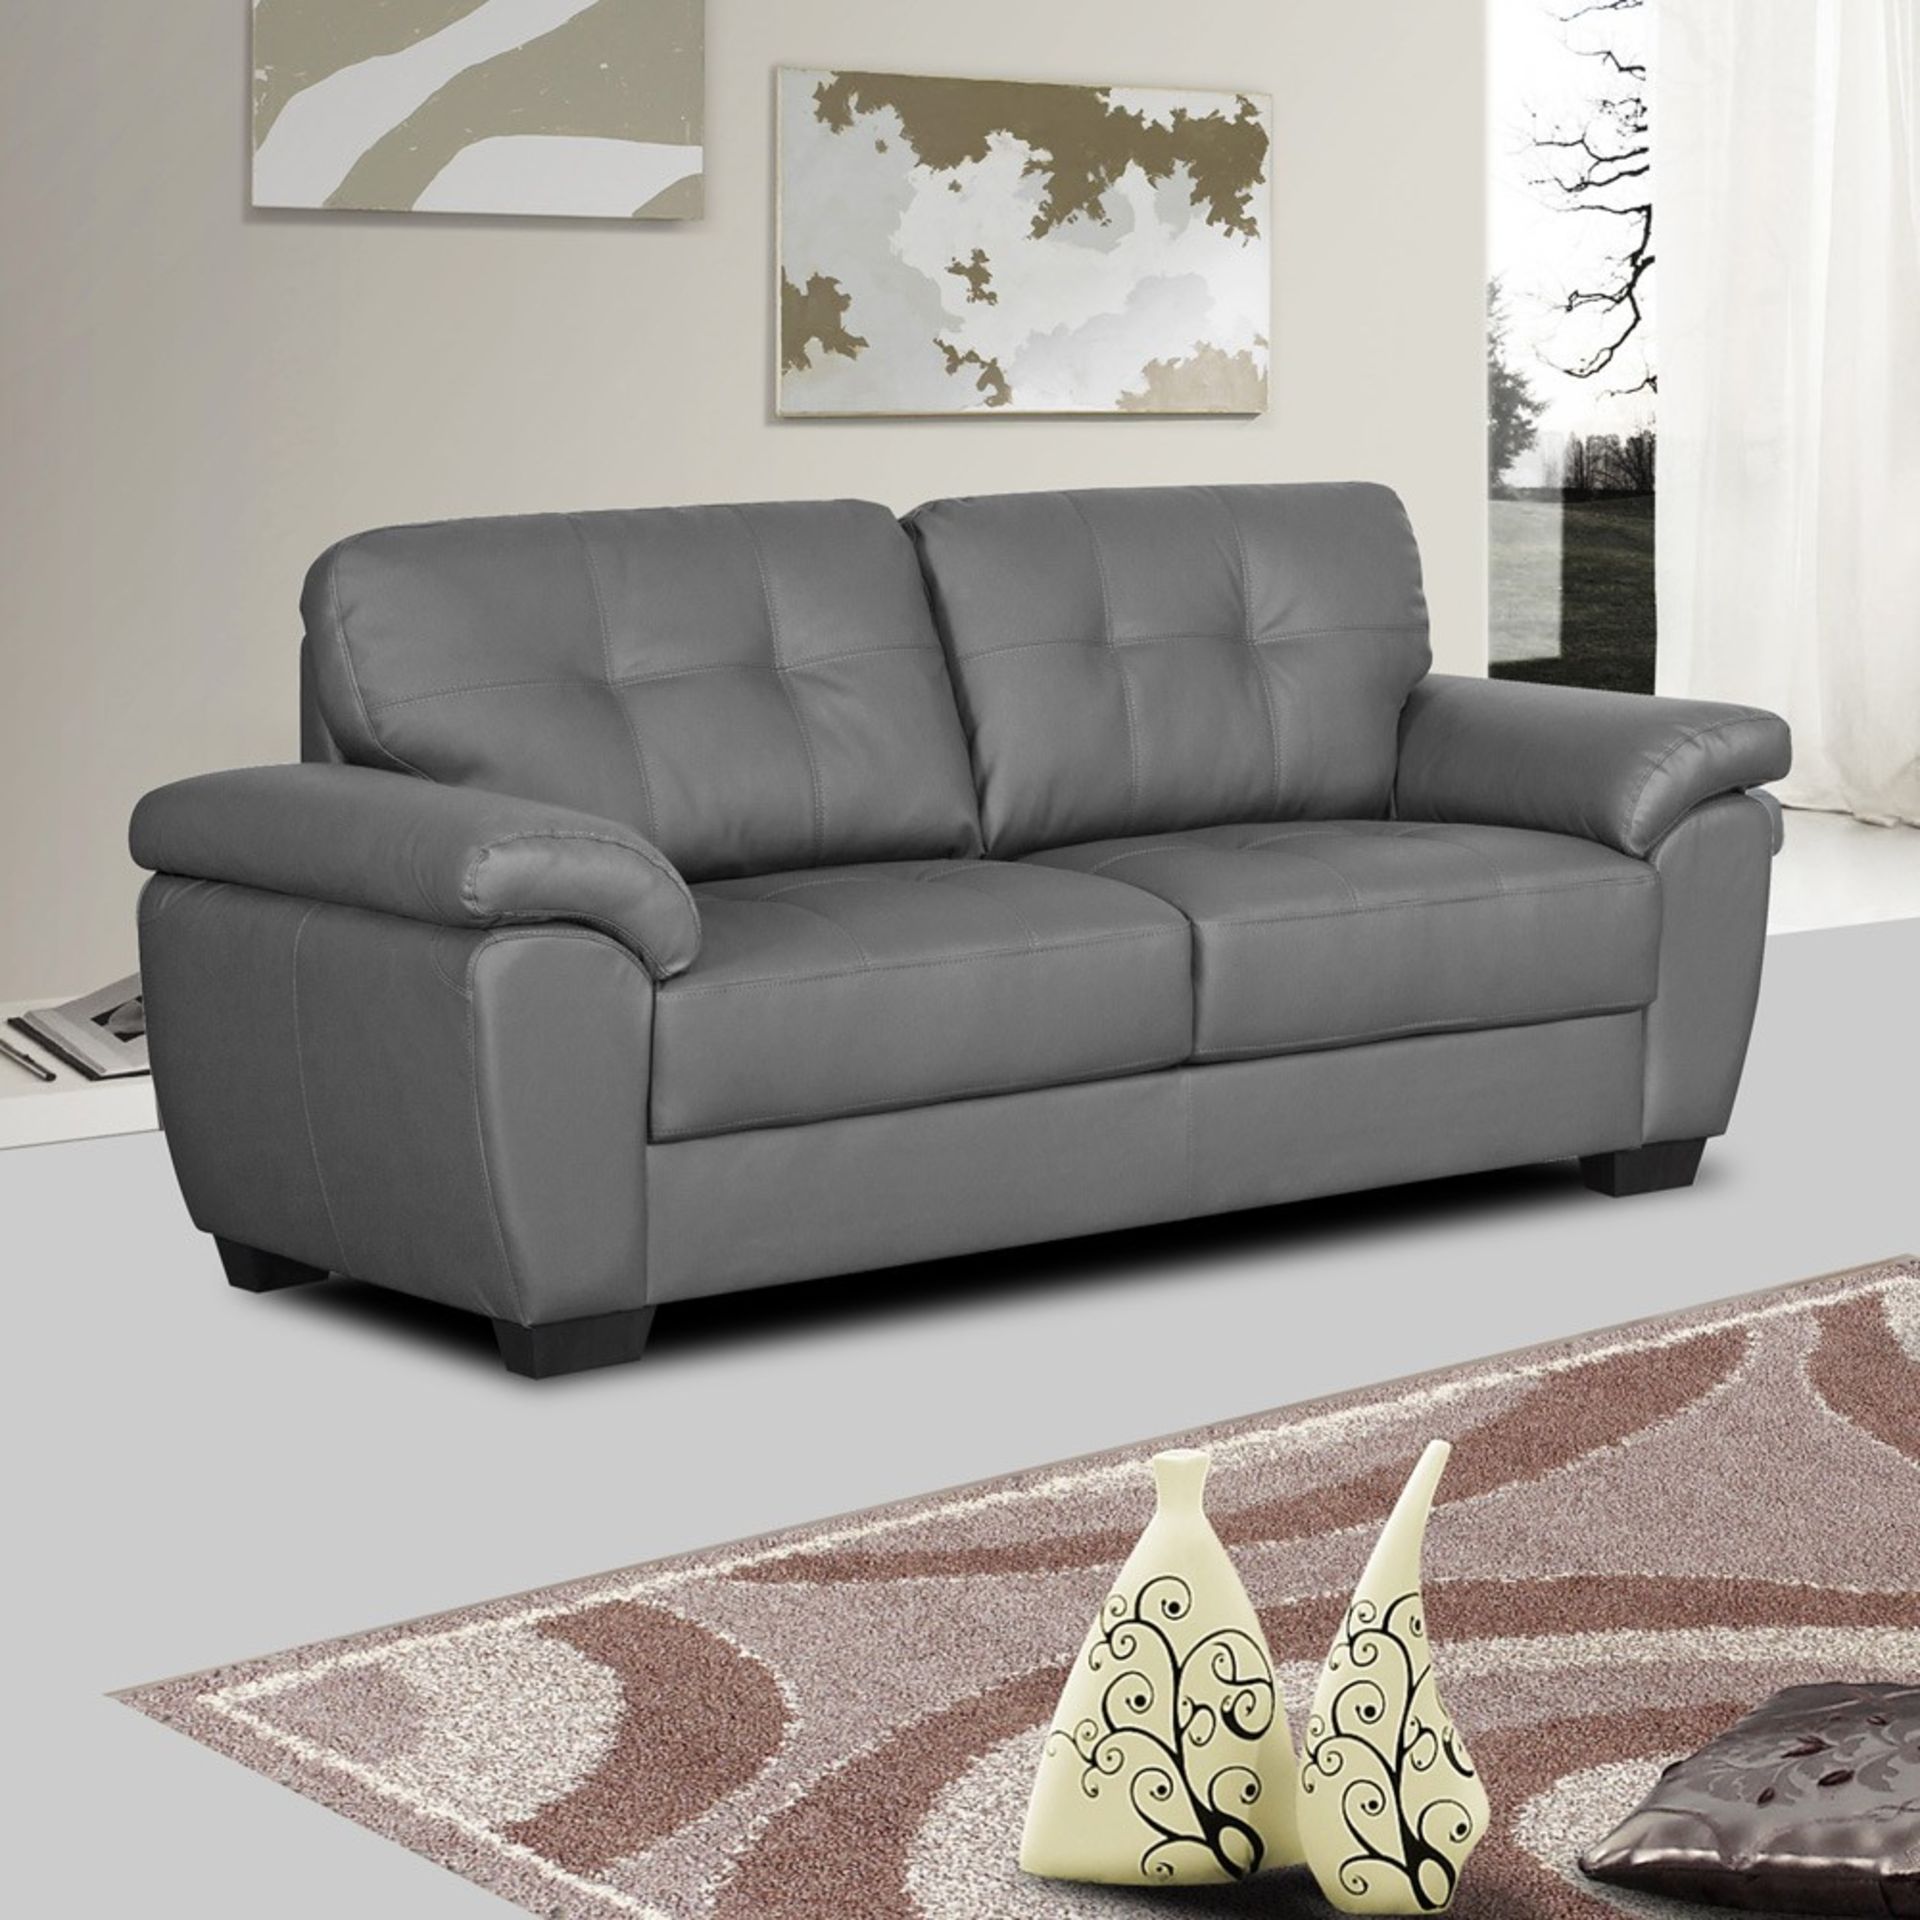 Brand New Boxed Sammi 3 Seater Sofa Plus 2 Matching Arm Chairs In Gun Metal Grey